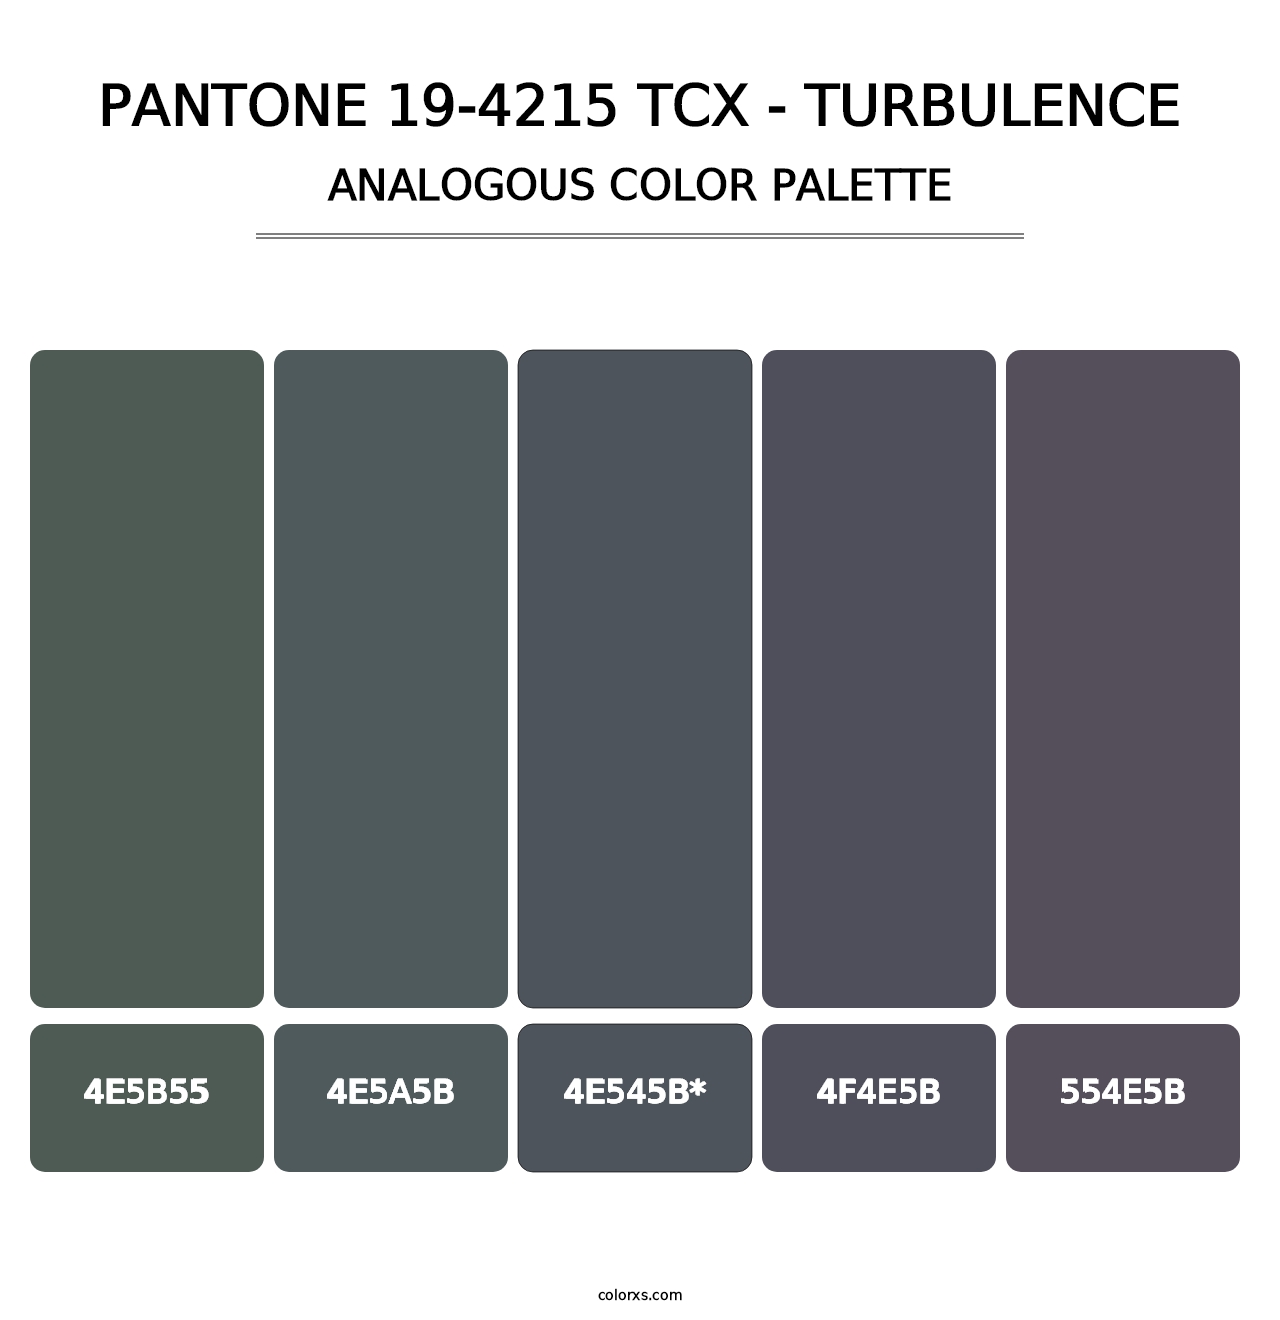 PANTONE 19-4215 TCX - Turbulence - Analogous Color Palette